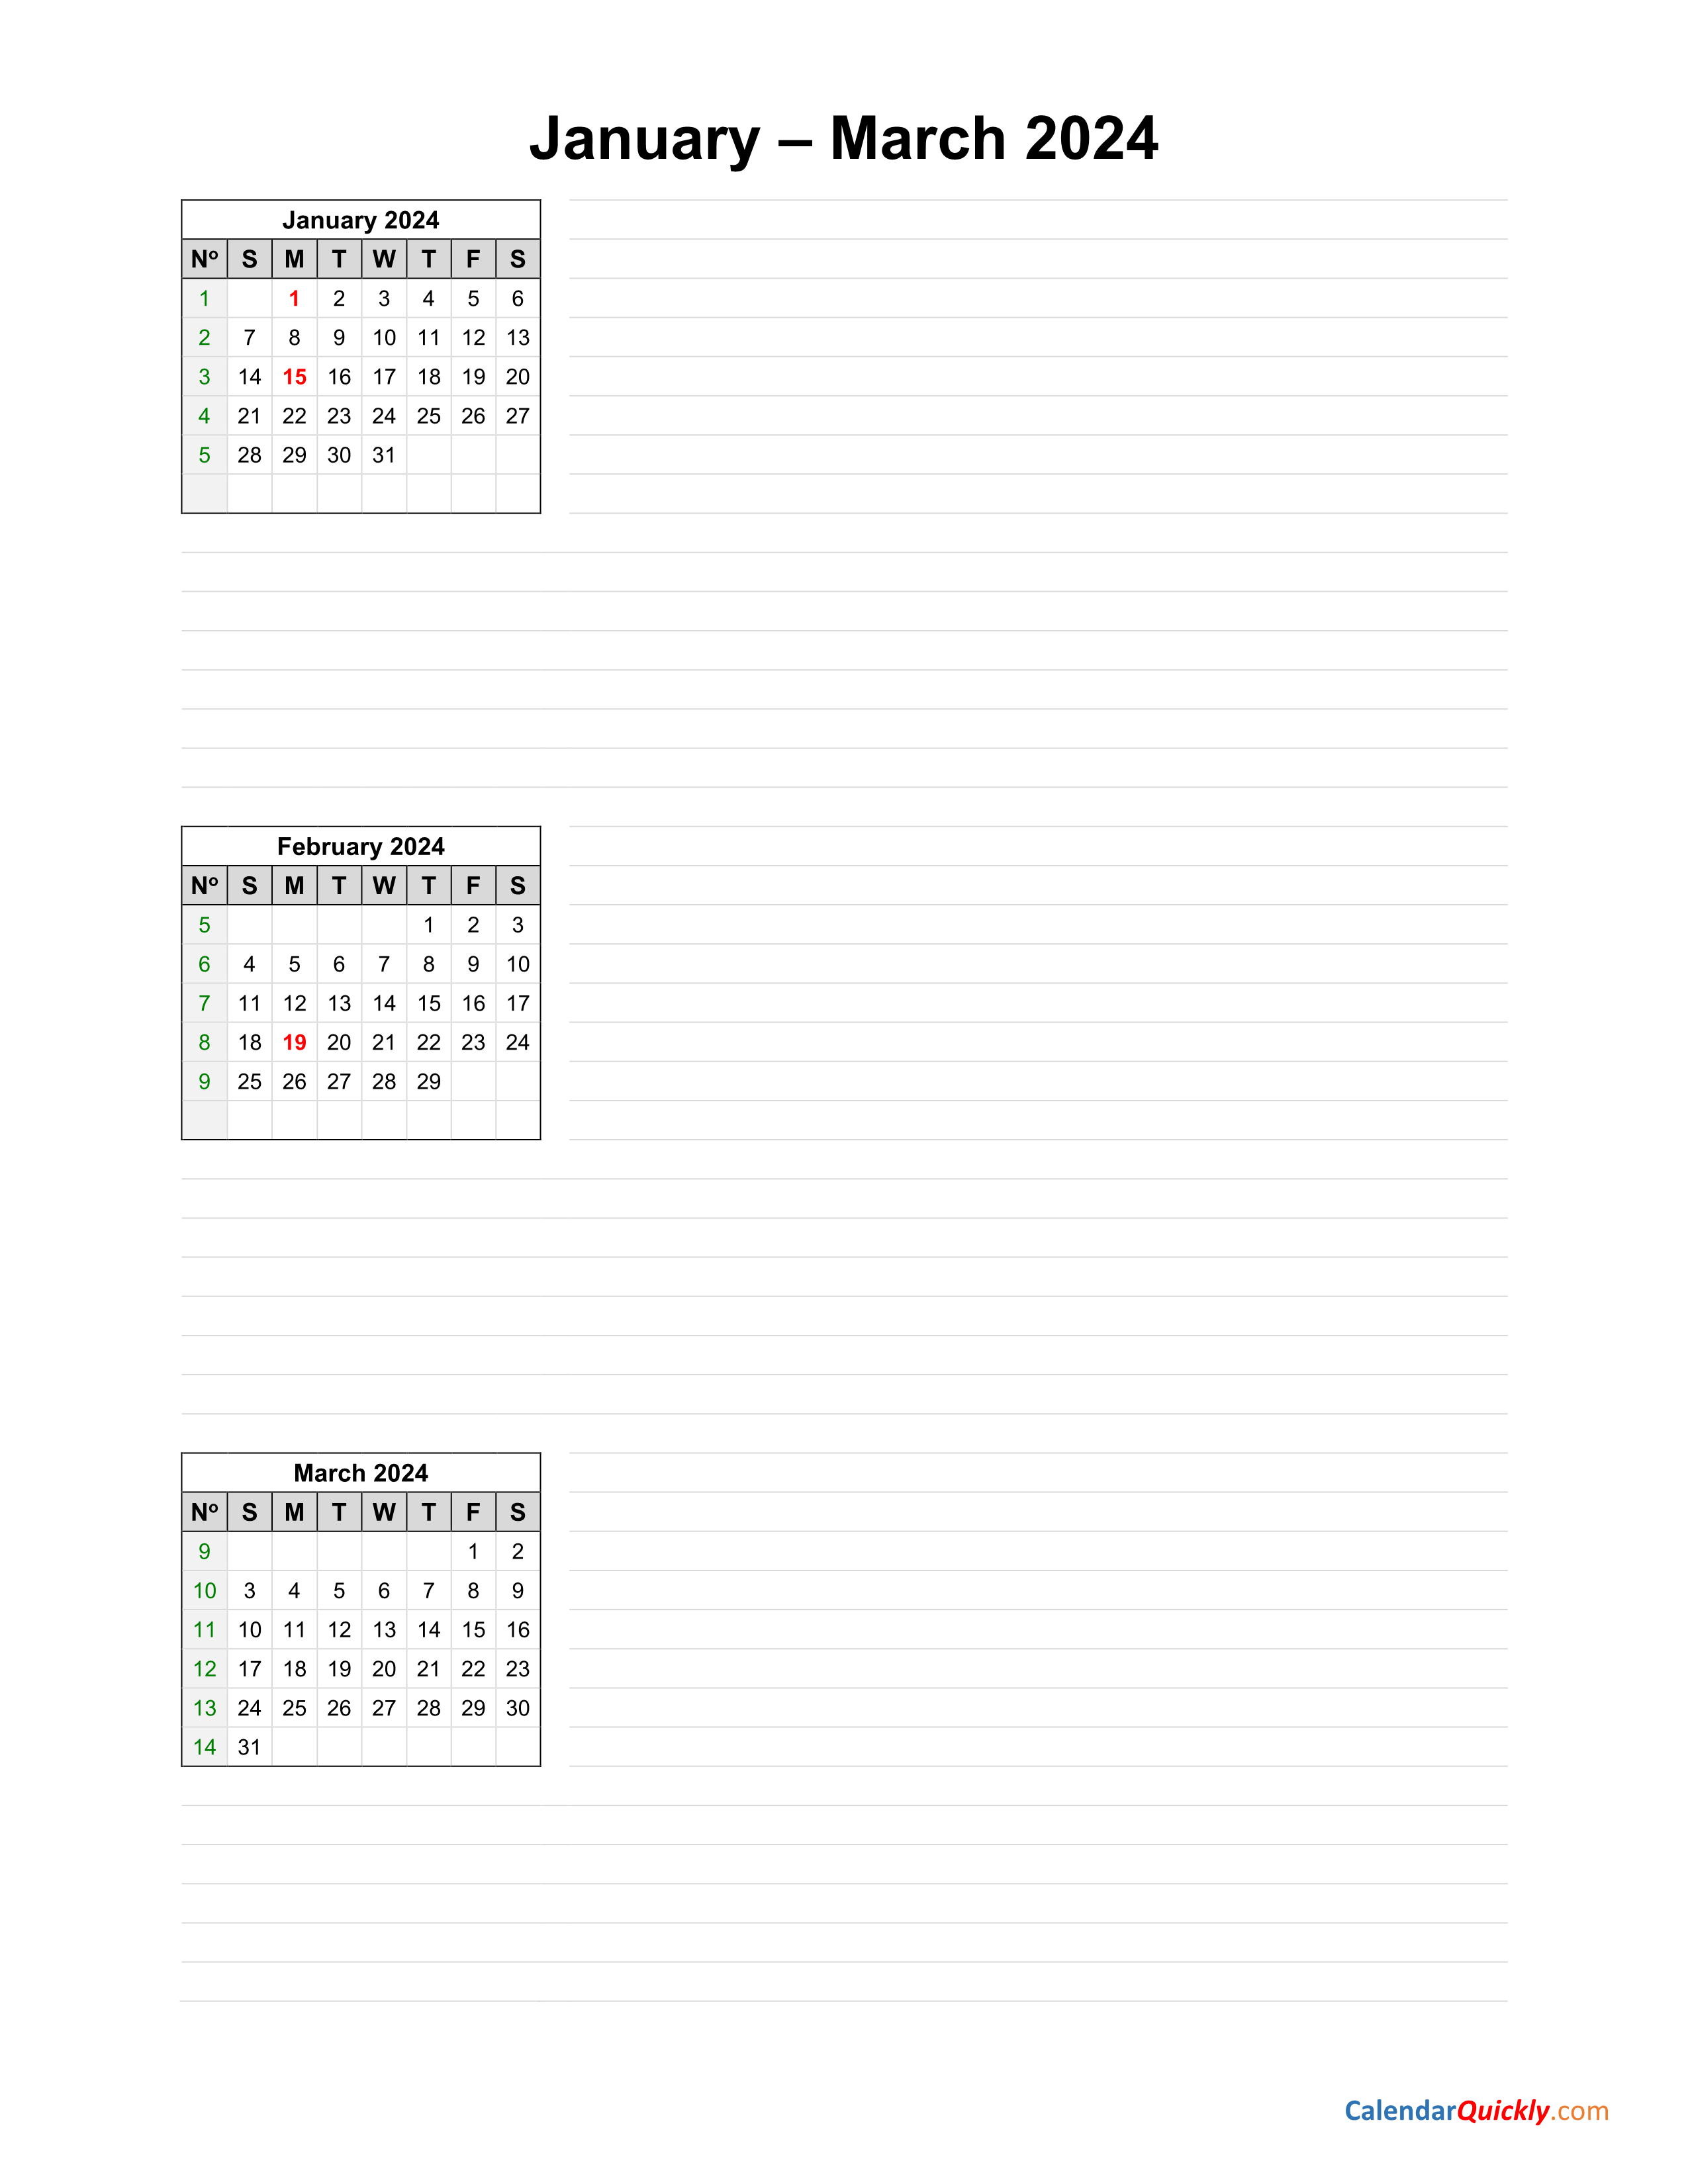 January to March 2024 Calendar Calendar Quickly